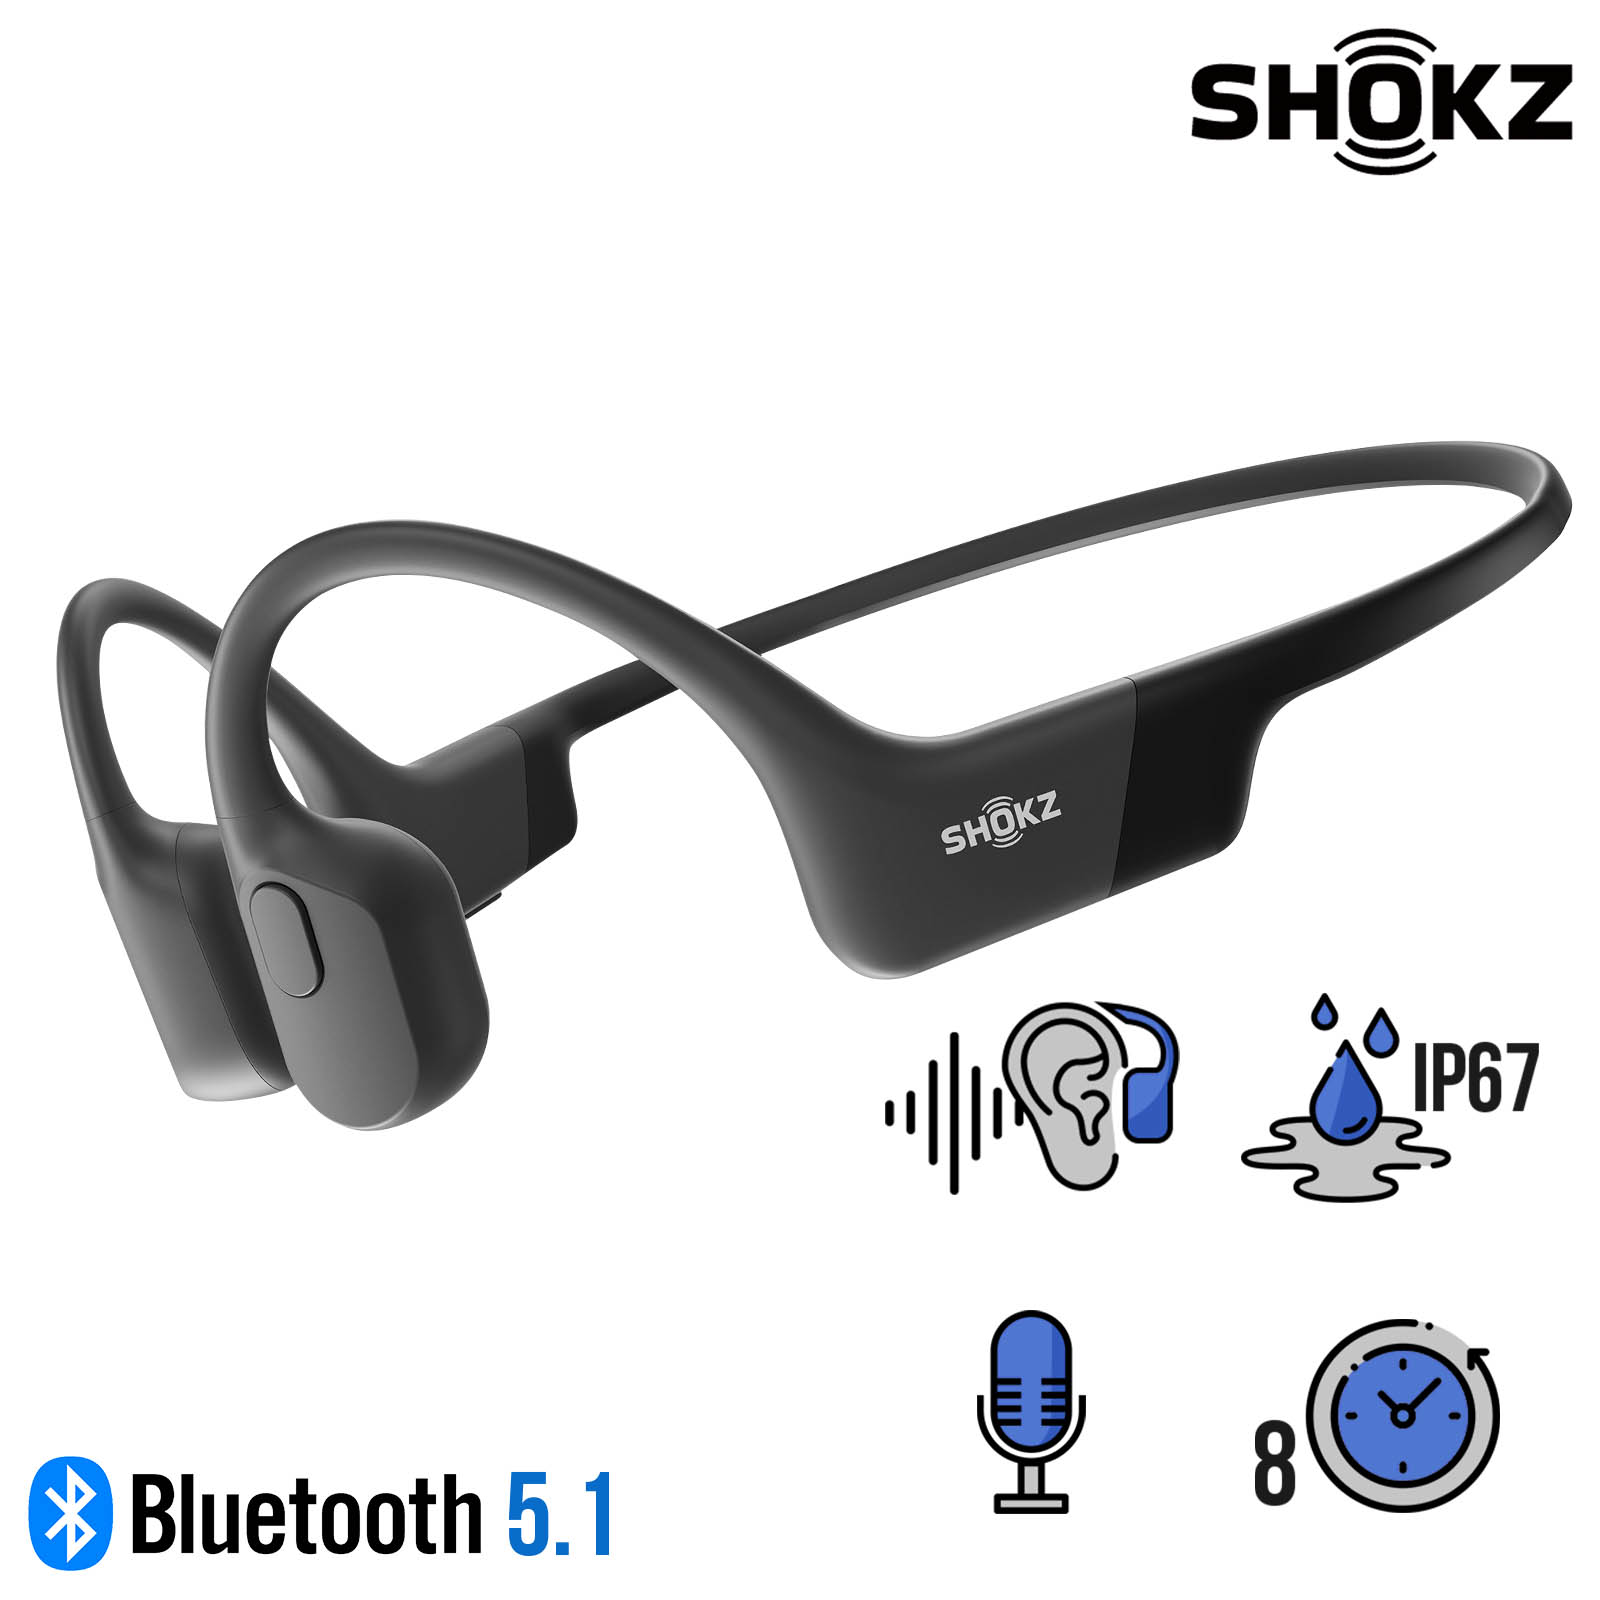 Casque Conduction Osseuse Shokz OpenMove Bluetooth 5.1, Sport Kit Mains  Libres Waterproof IP55 - Gris - Français